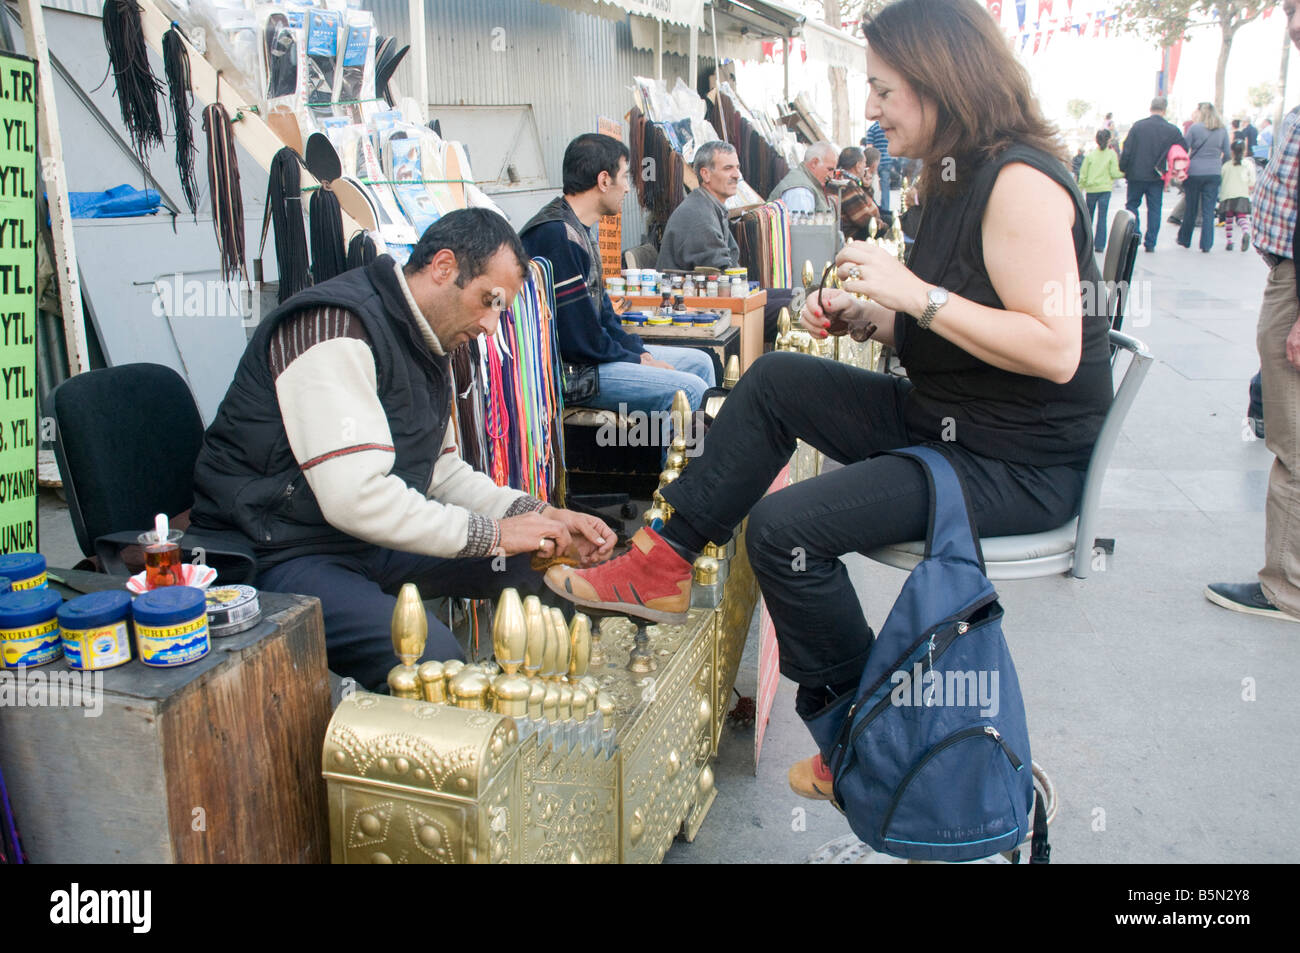 Turquia Estambul Shoeshine stand clienta tener sus zapatos pulidos Foto de stock